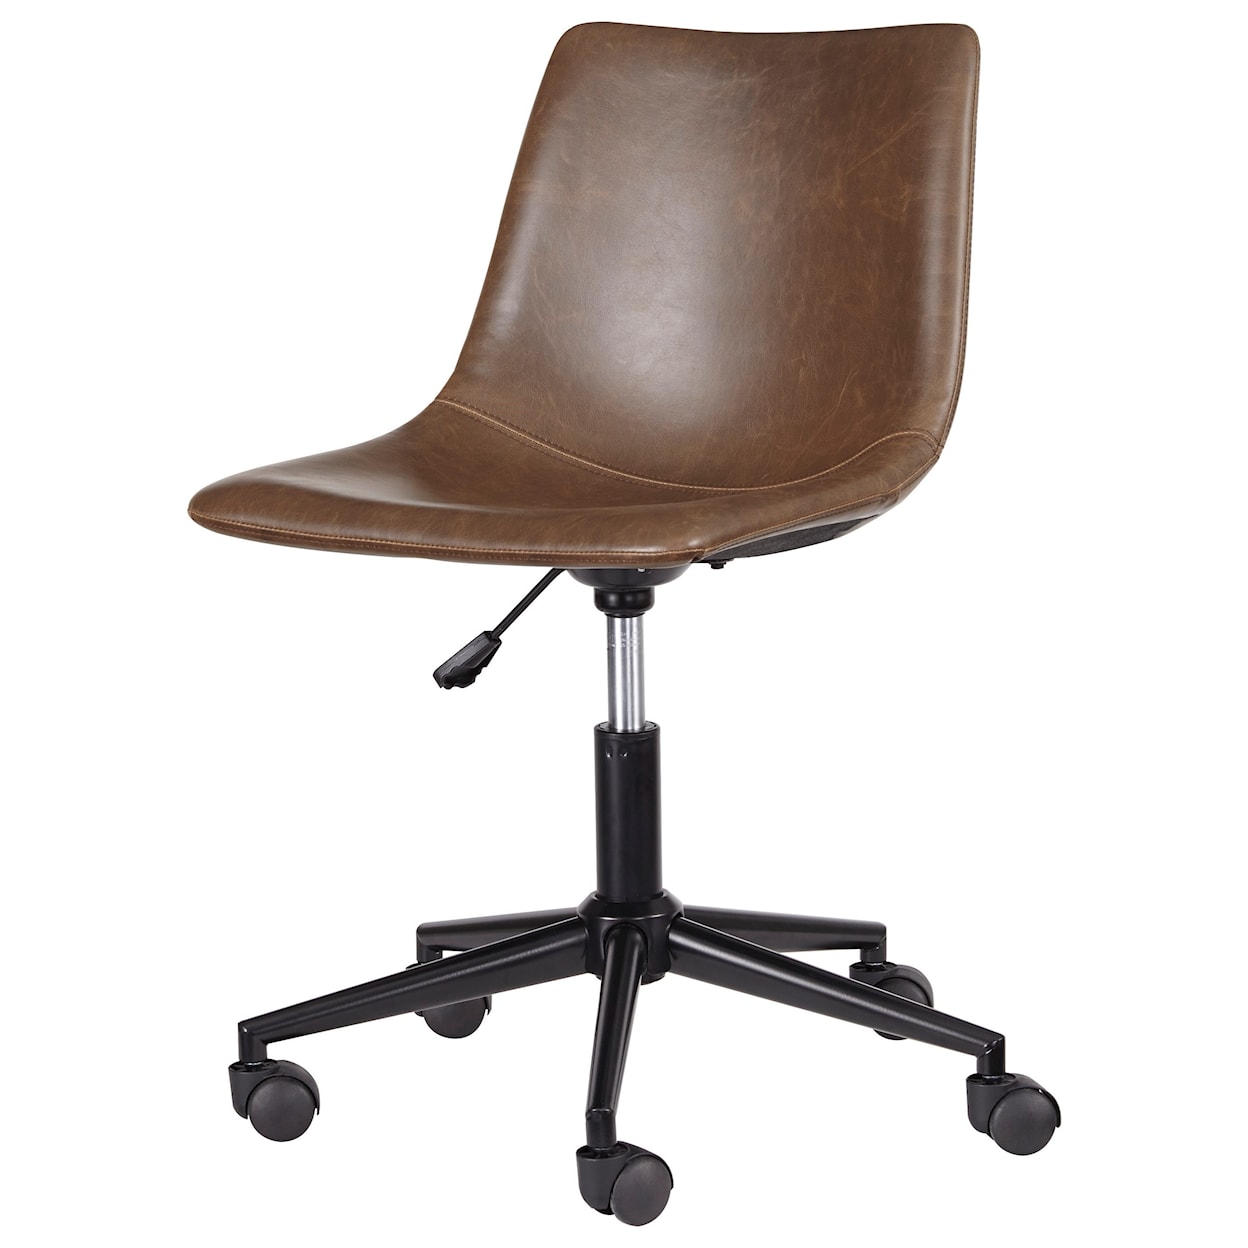 Benchcraft Office Chair Program Home Office Swivel Desk Chair